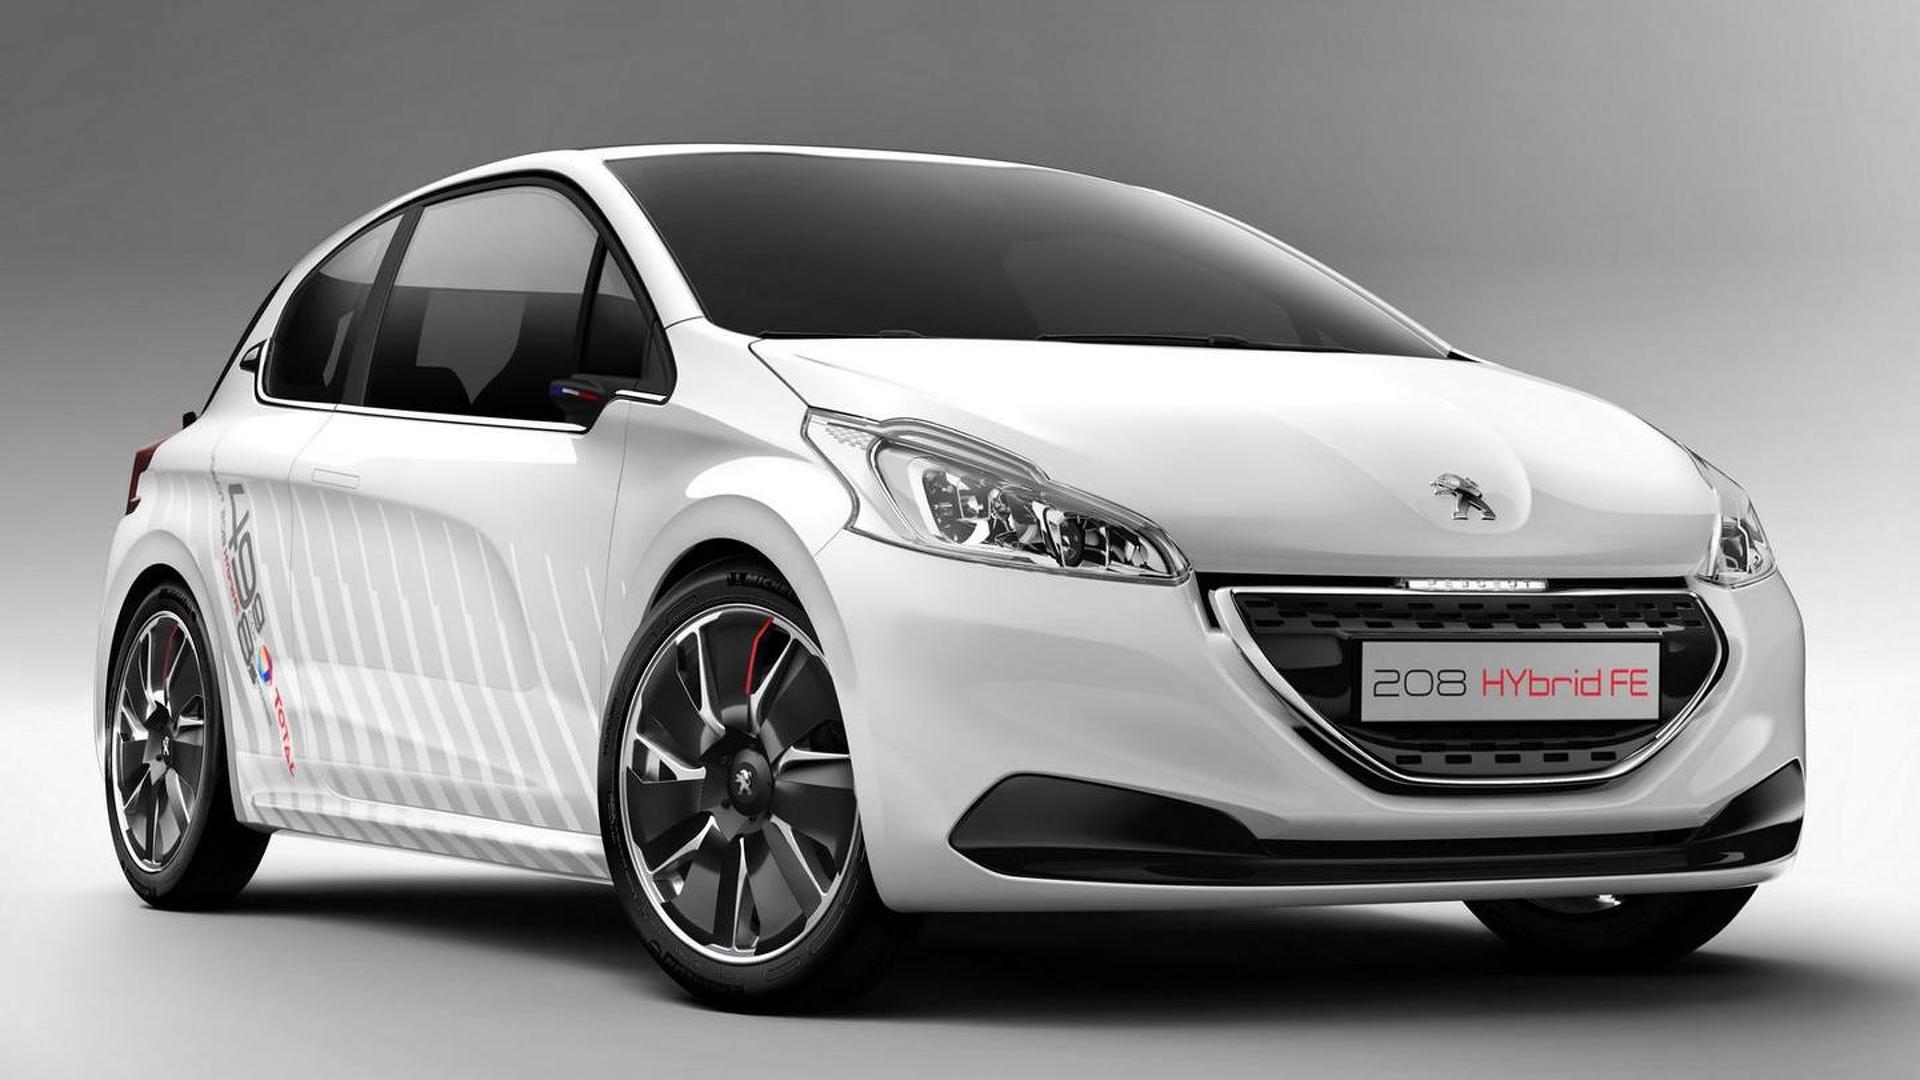 Peugeot 208 Hybrid FE Concept official photo emerge